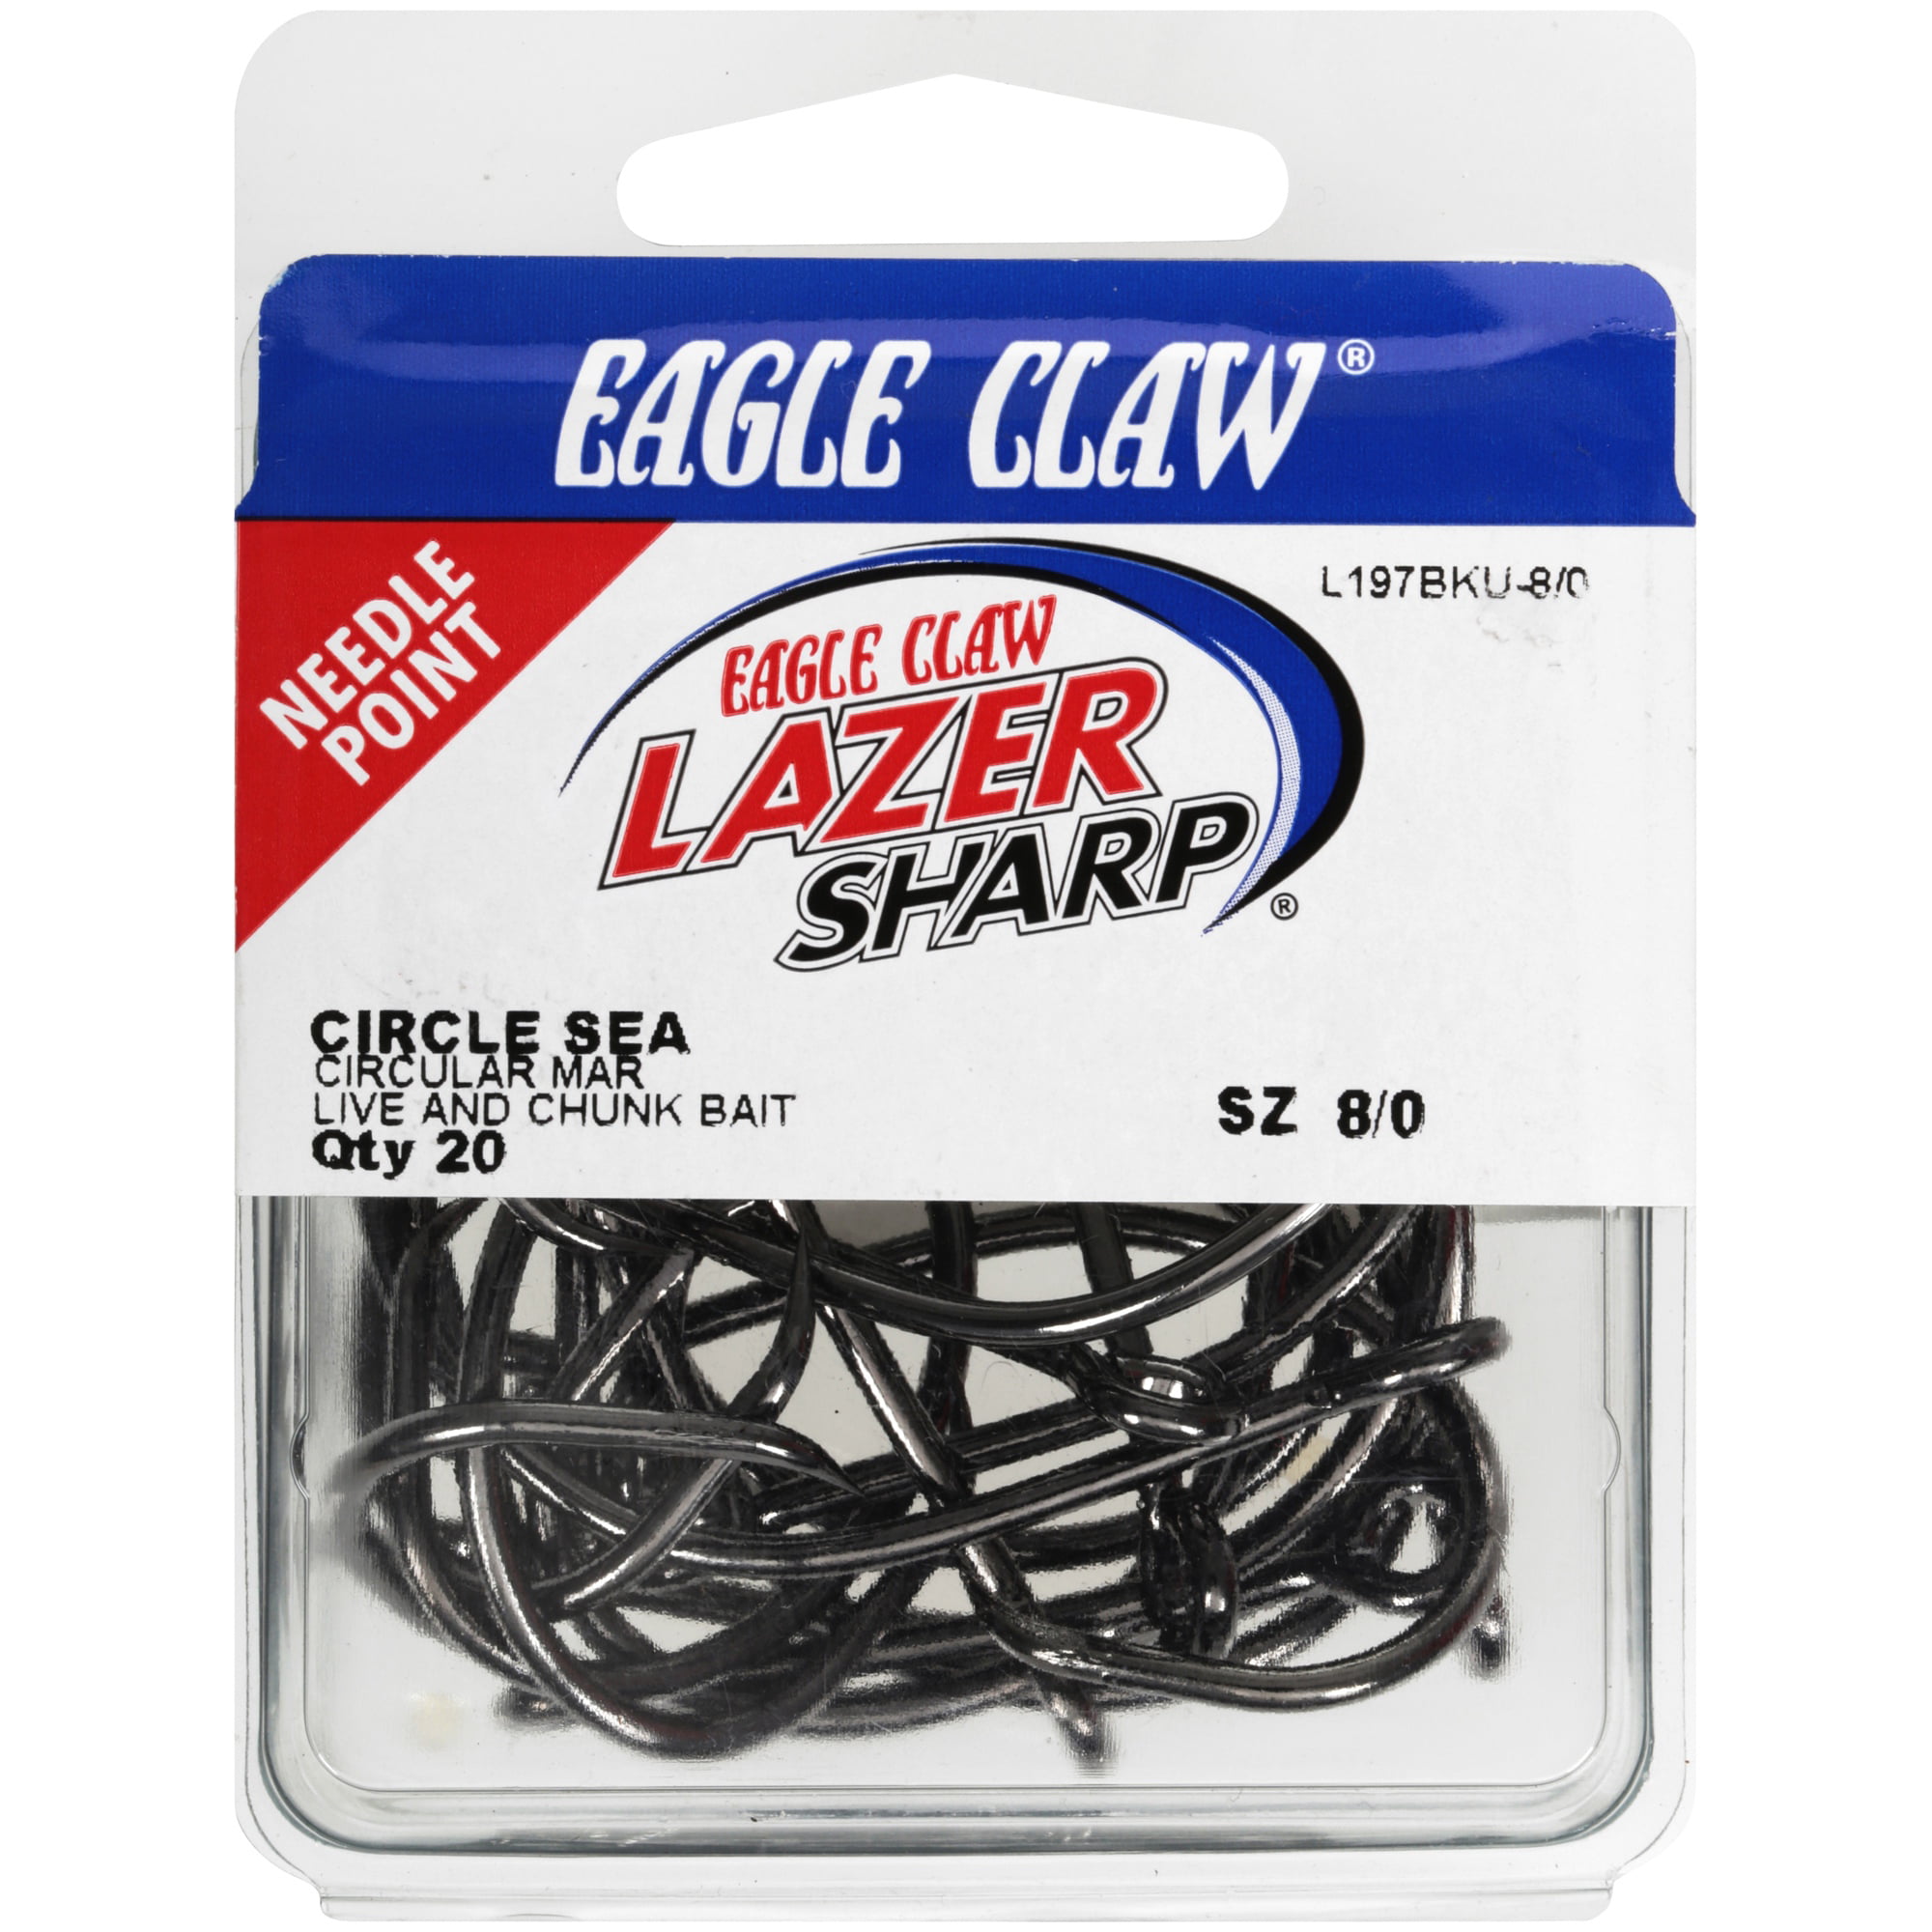 Eagle Claw L702GH-4 Lazer Sharp Circle Sea Hook Size 4 Needle